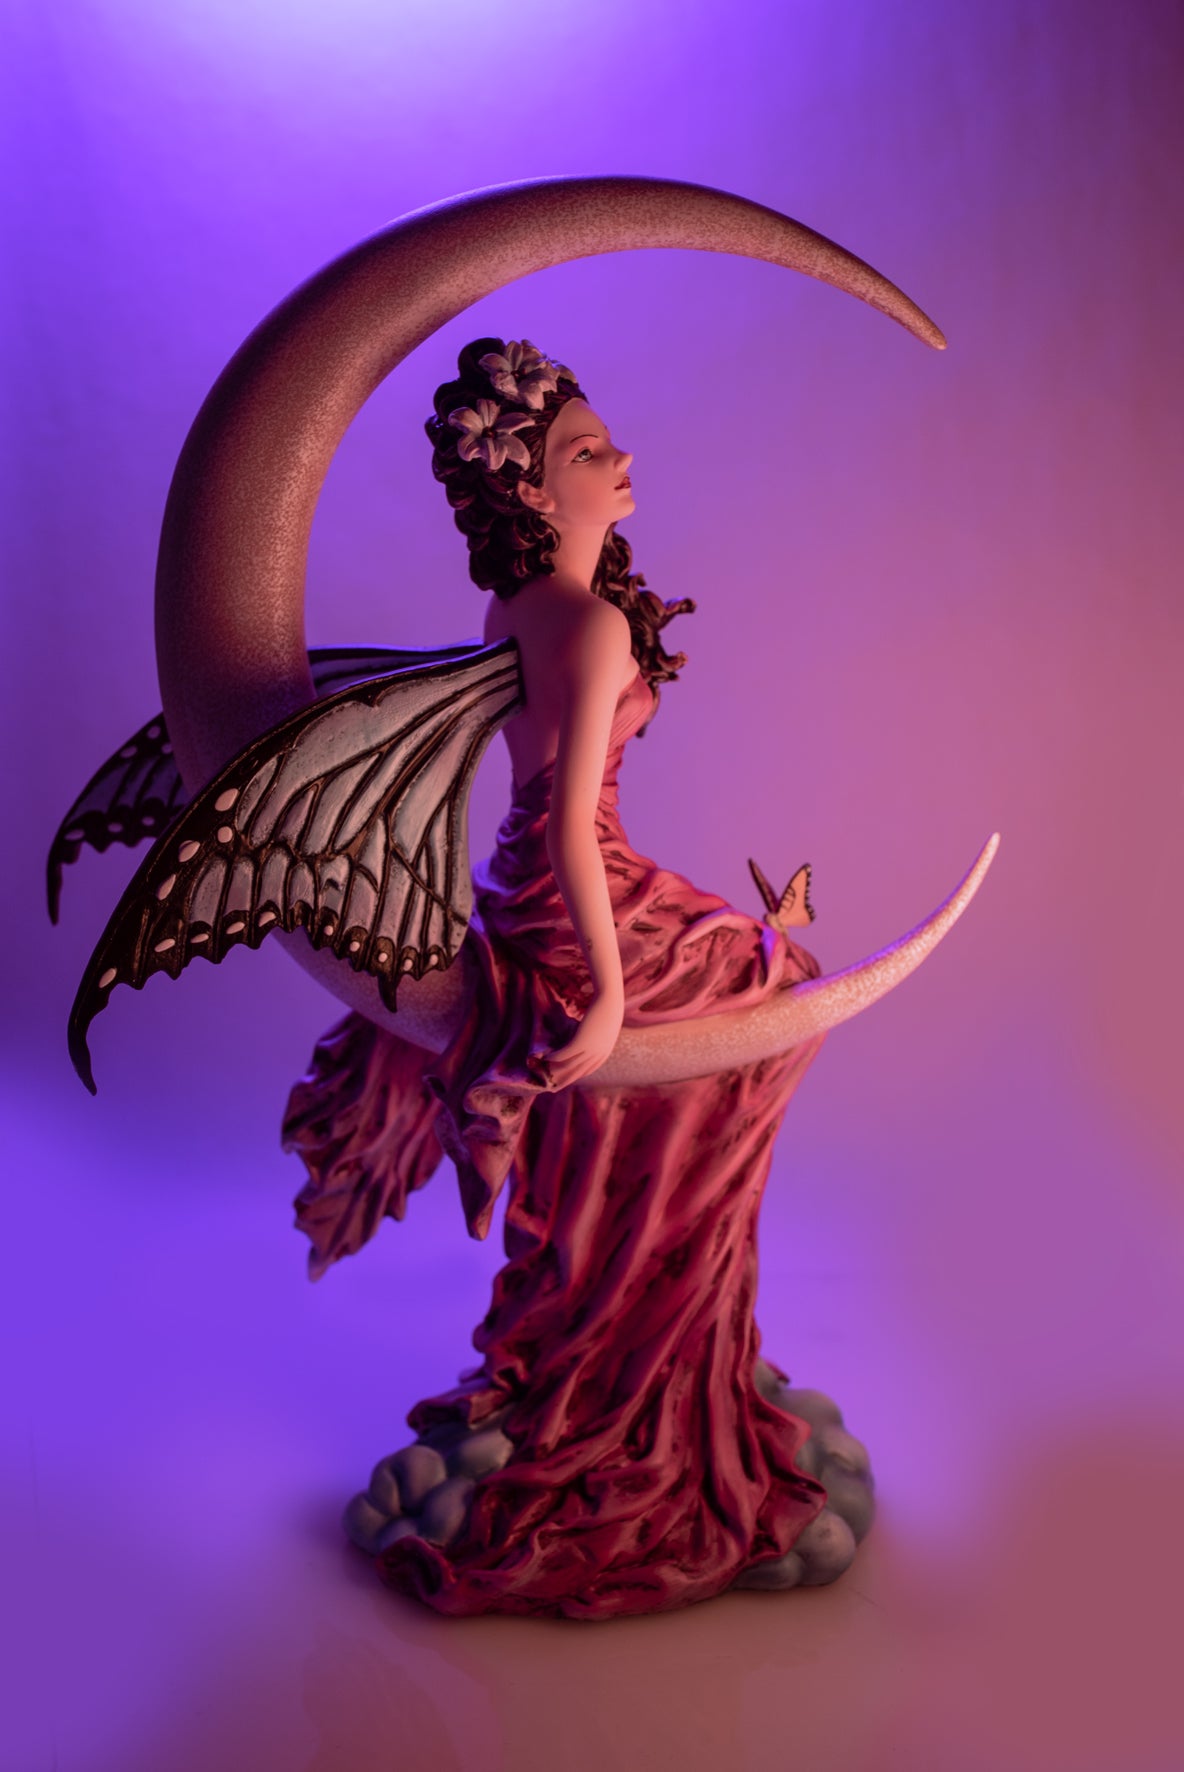 Amethyst Moon Faery Figurine by Nene Thomas - Rivendell Shop